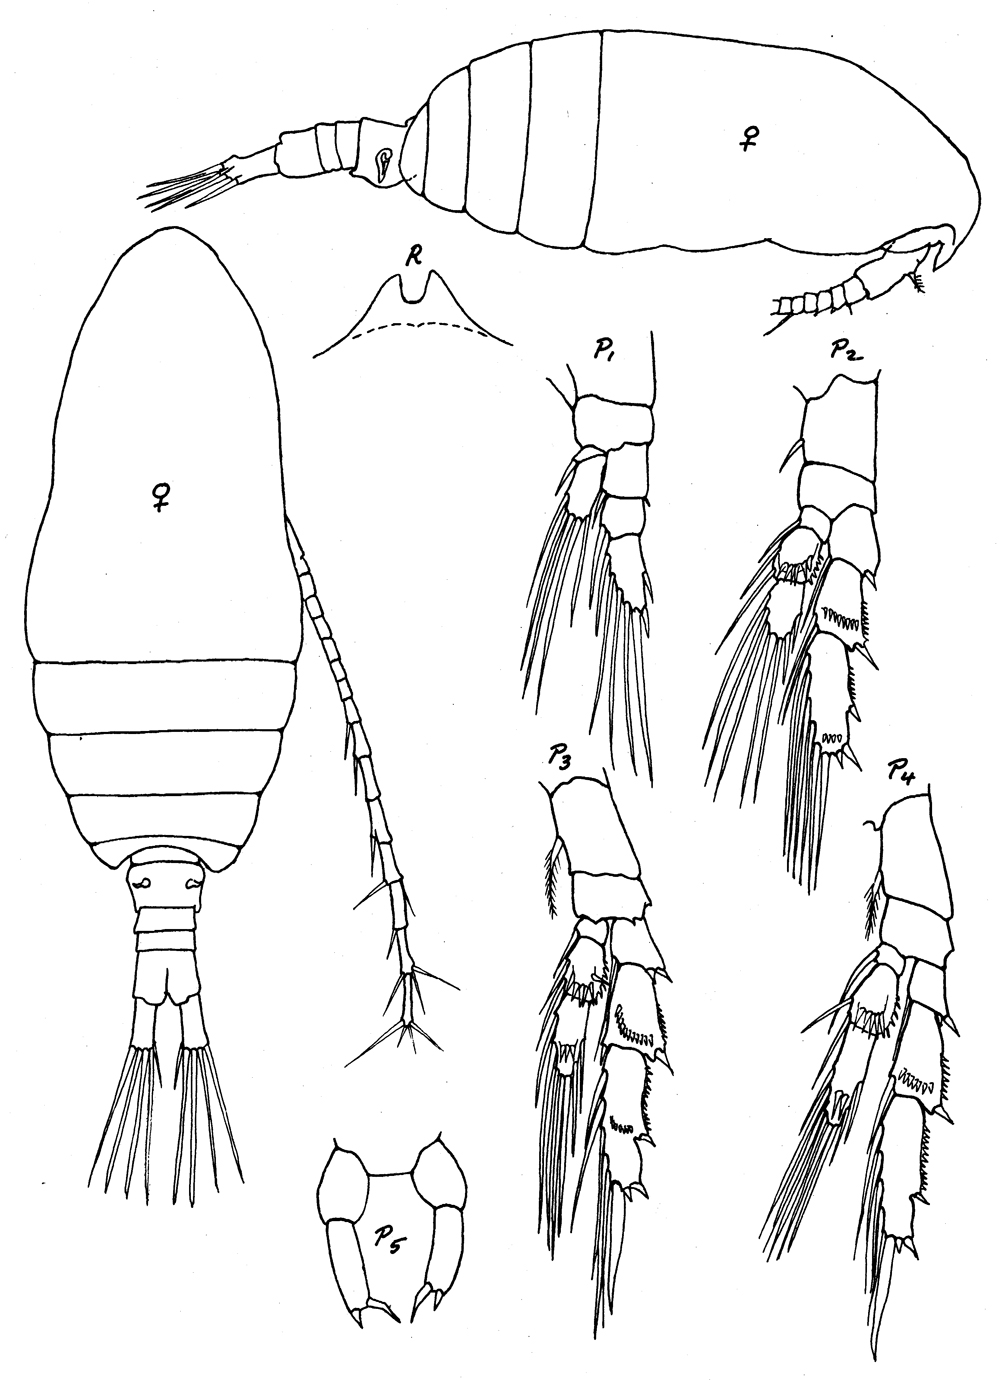 Species Parvocalanus scotti - Plate 3 of morphological figures